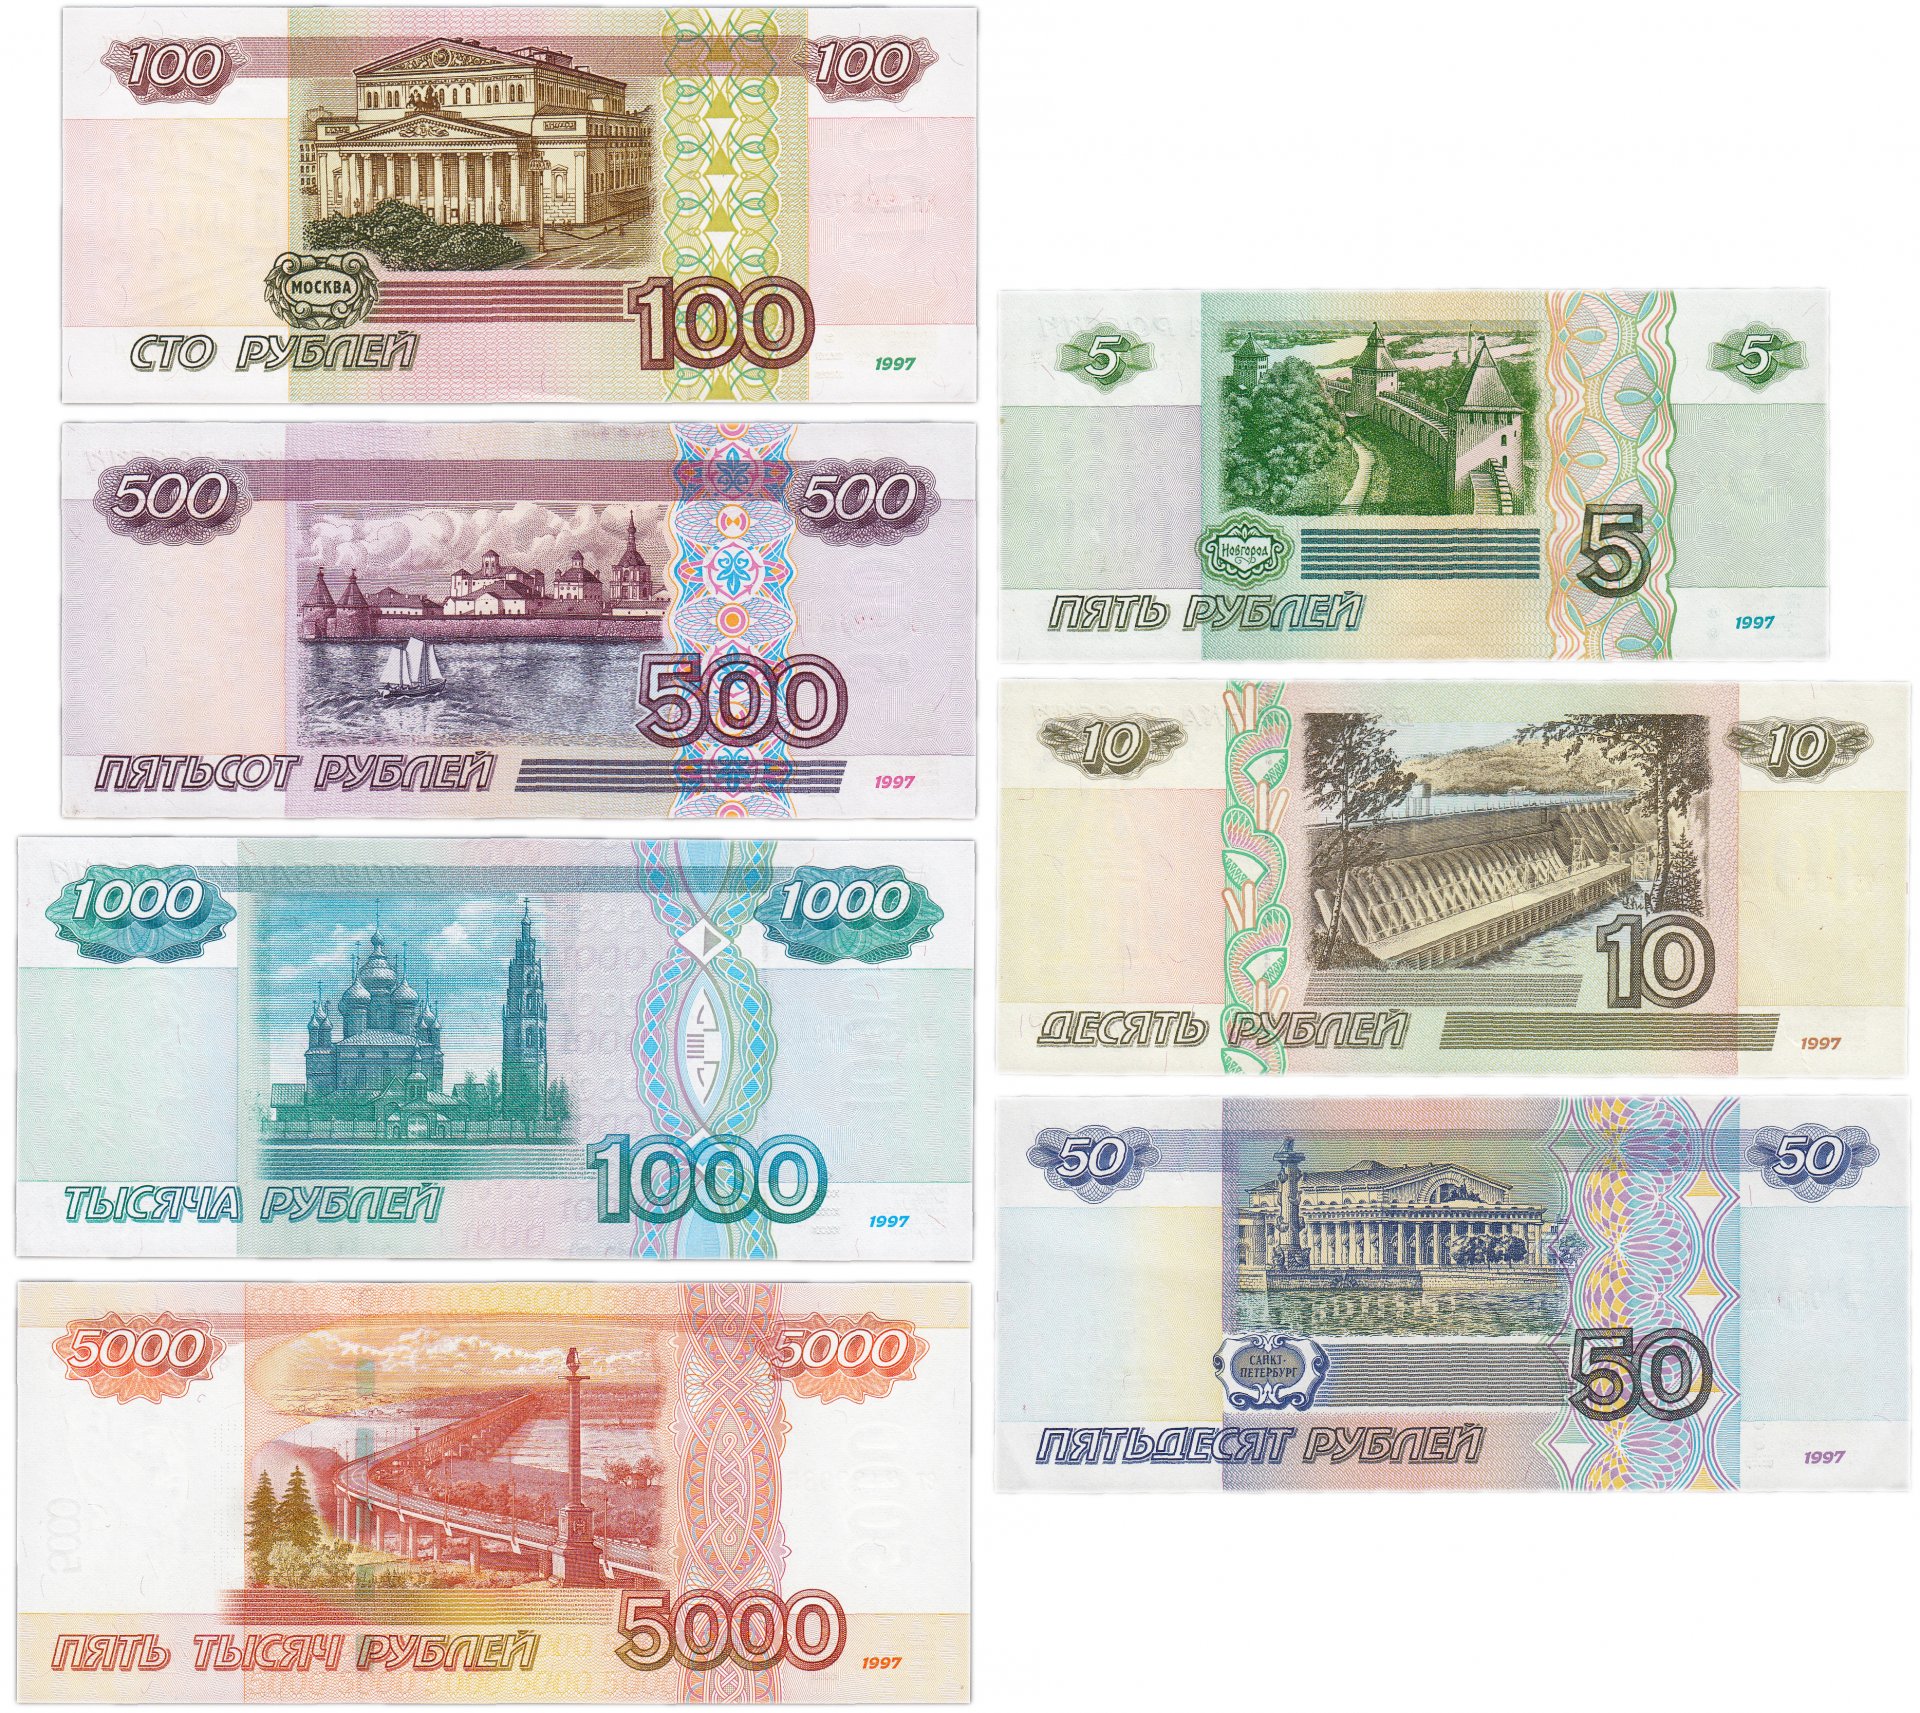 5 от 500 рублей